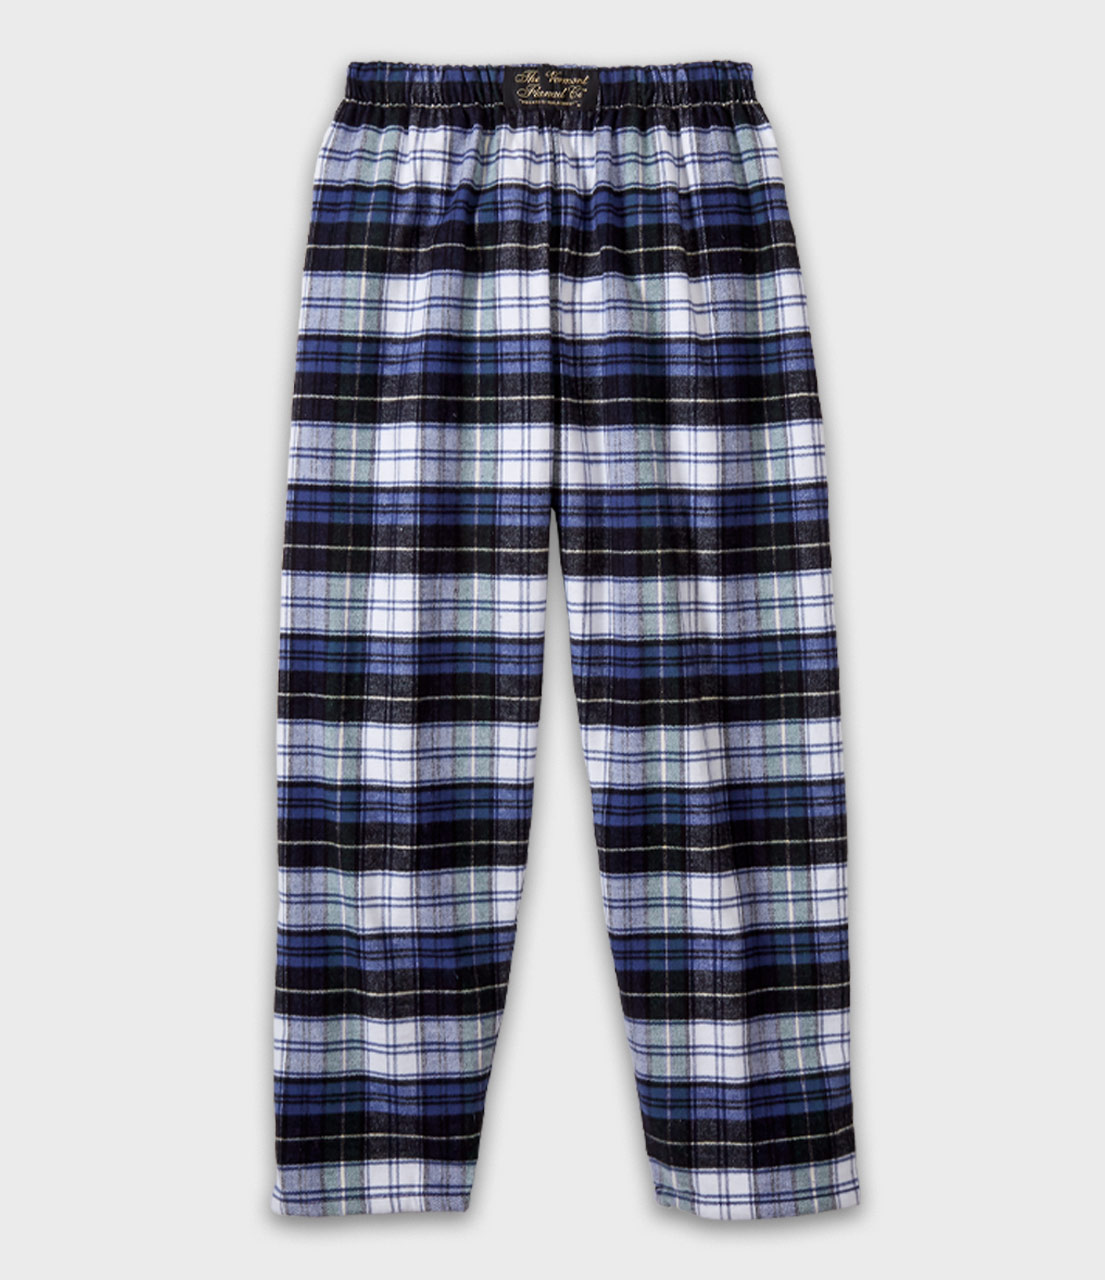 Super-Soft Plaid Flannel Pajamas